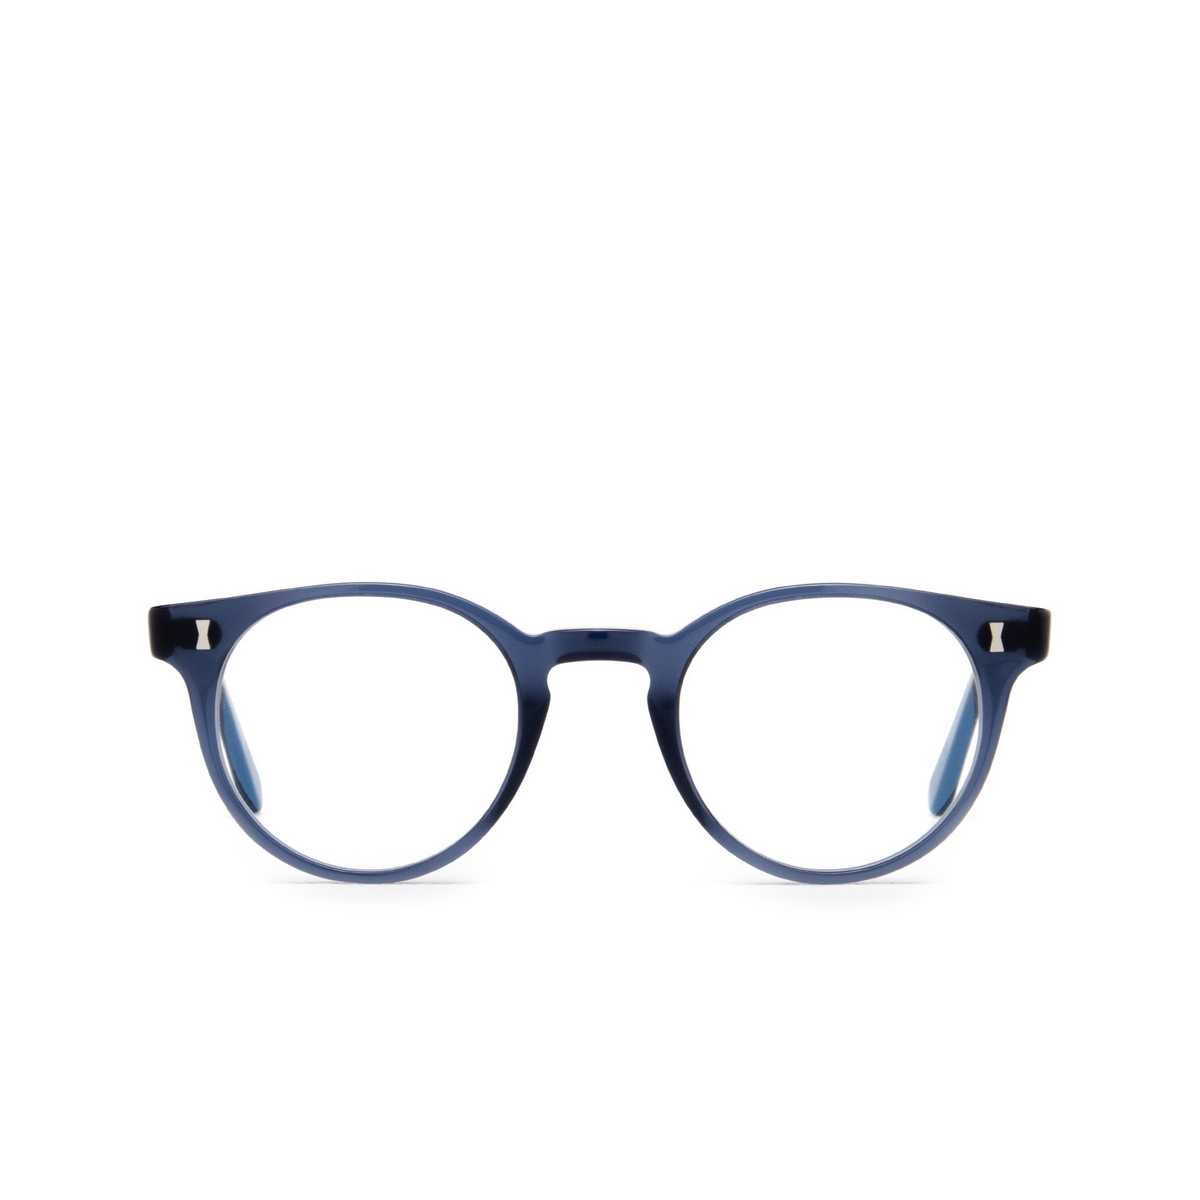 Cubitts HERBRAND Eyeglasses HER-R-BLU Blue - front view